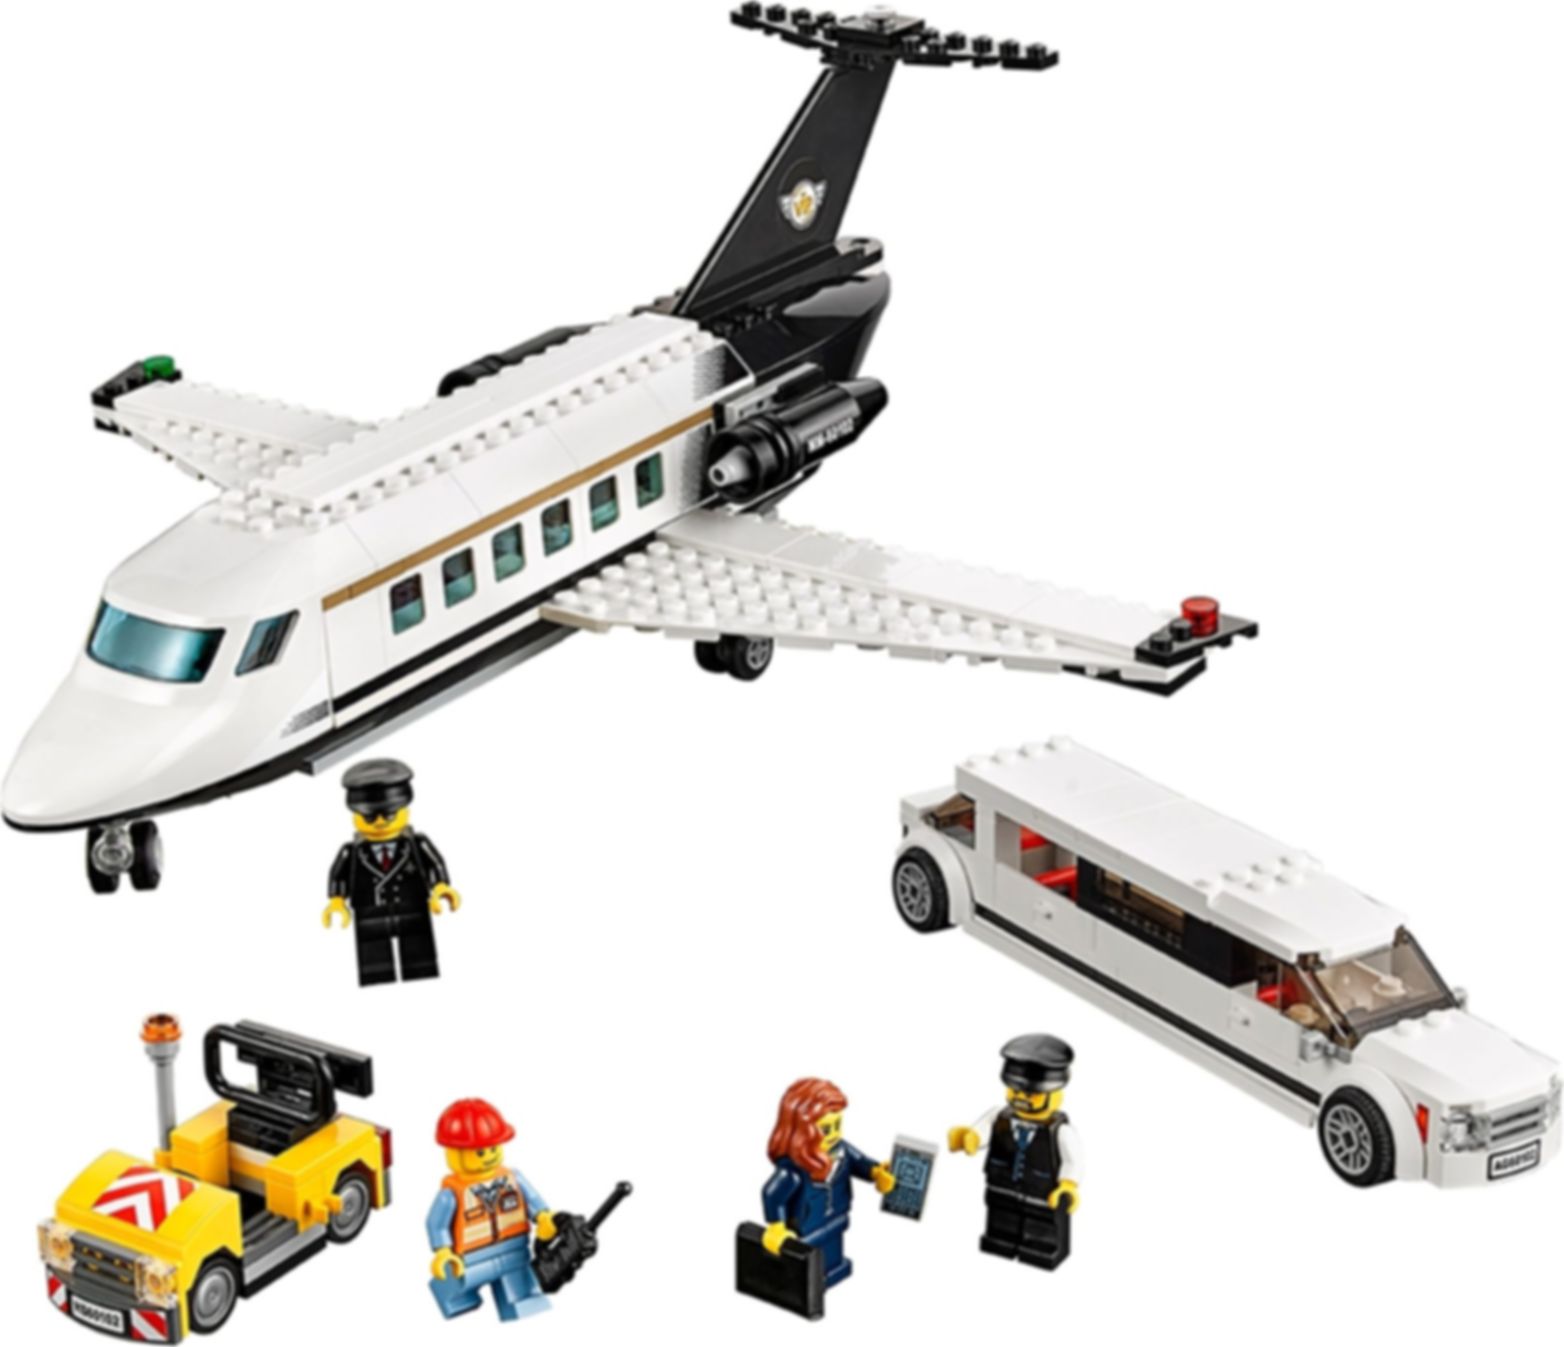 LEGO® City Airport VIP Service components